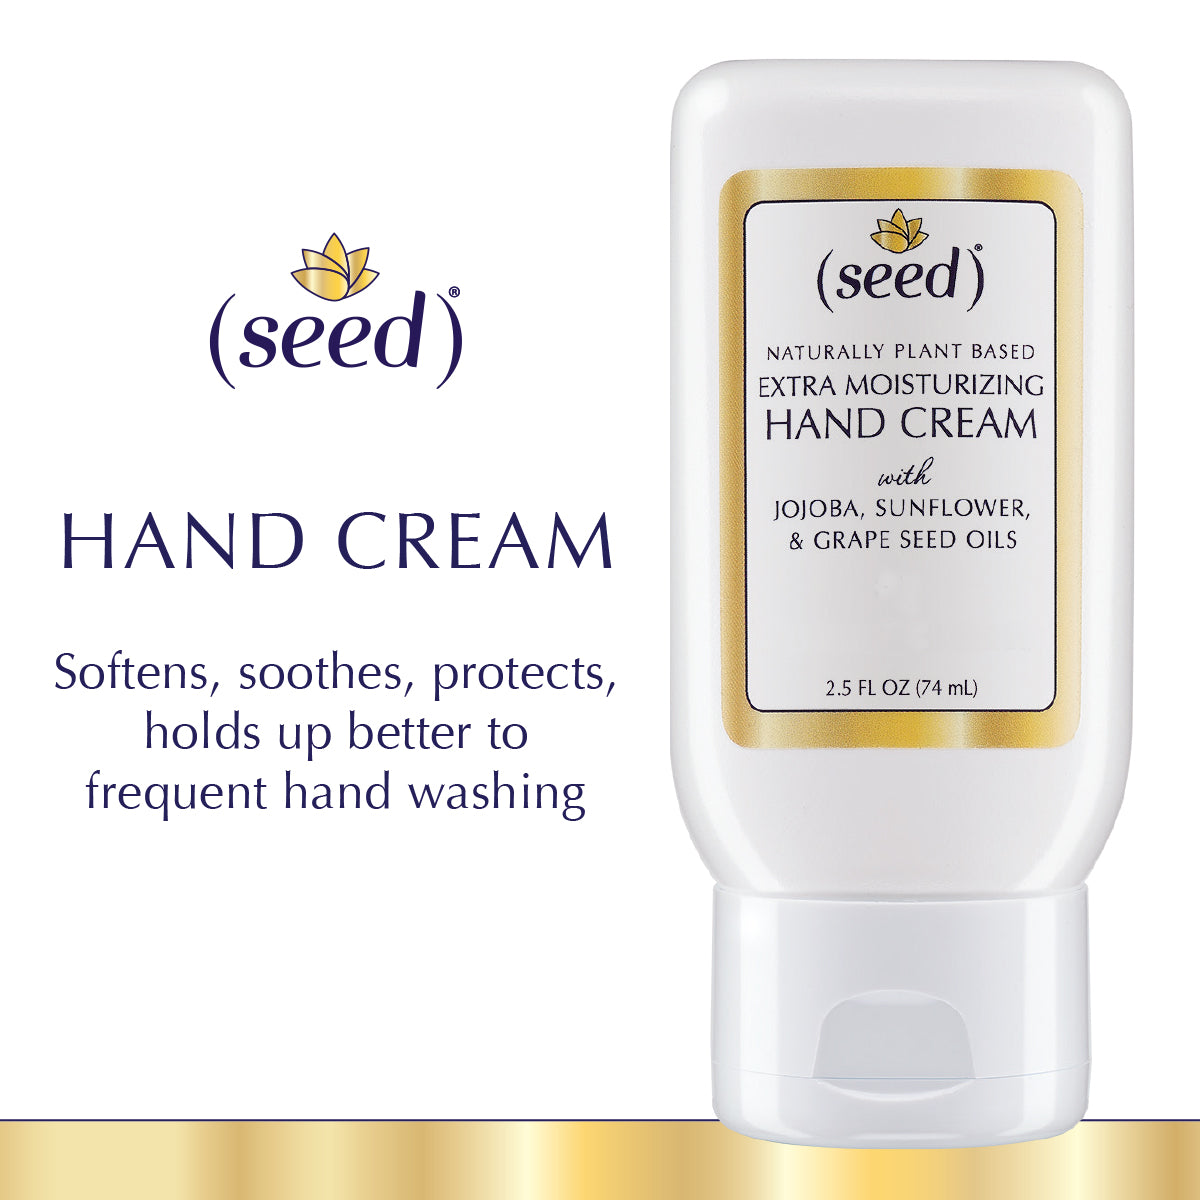 Seed Extra Moisturizing Hand Cream Benefits